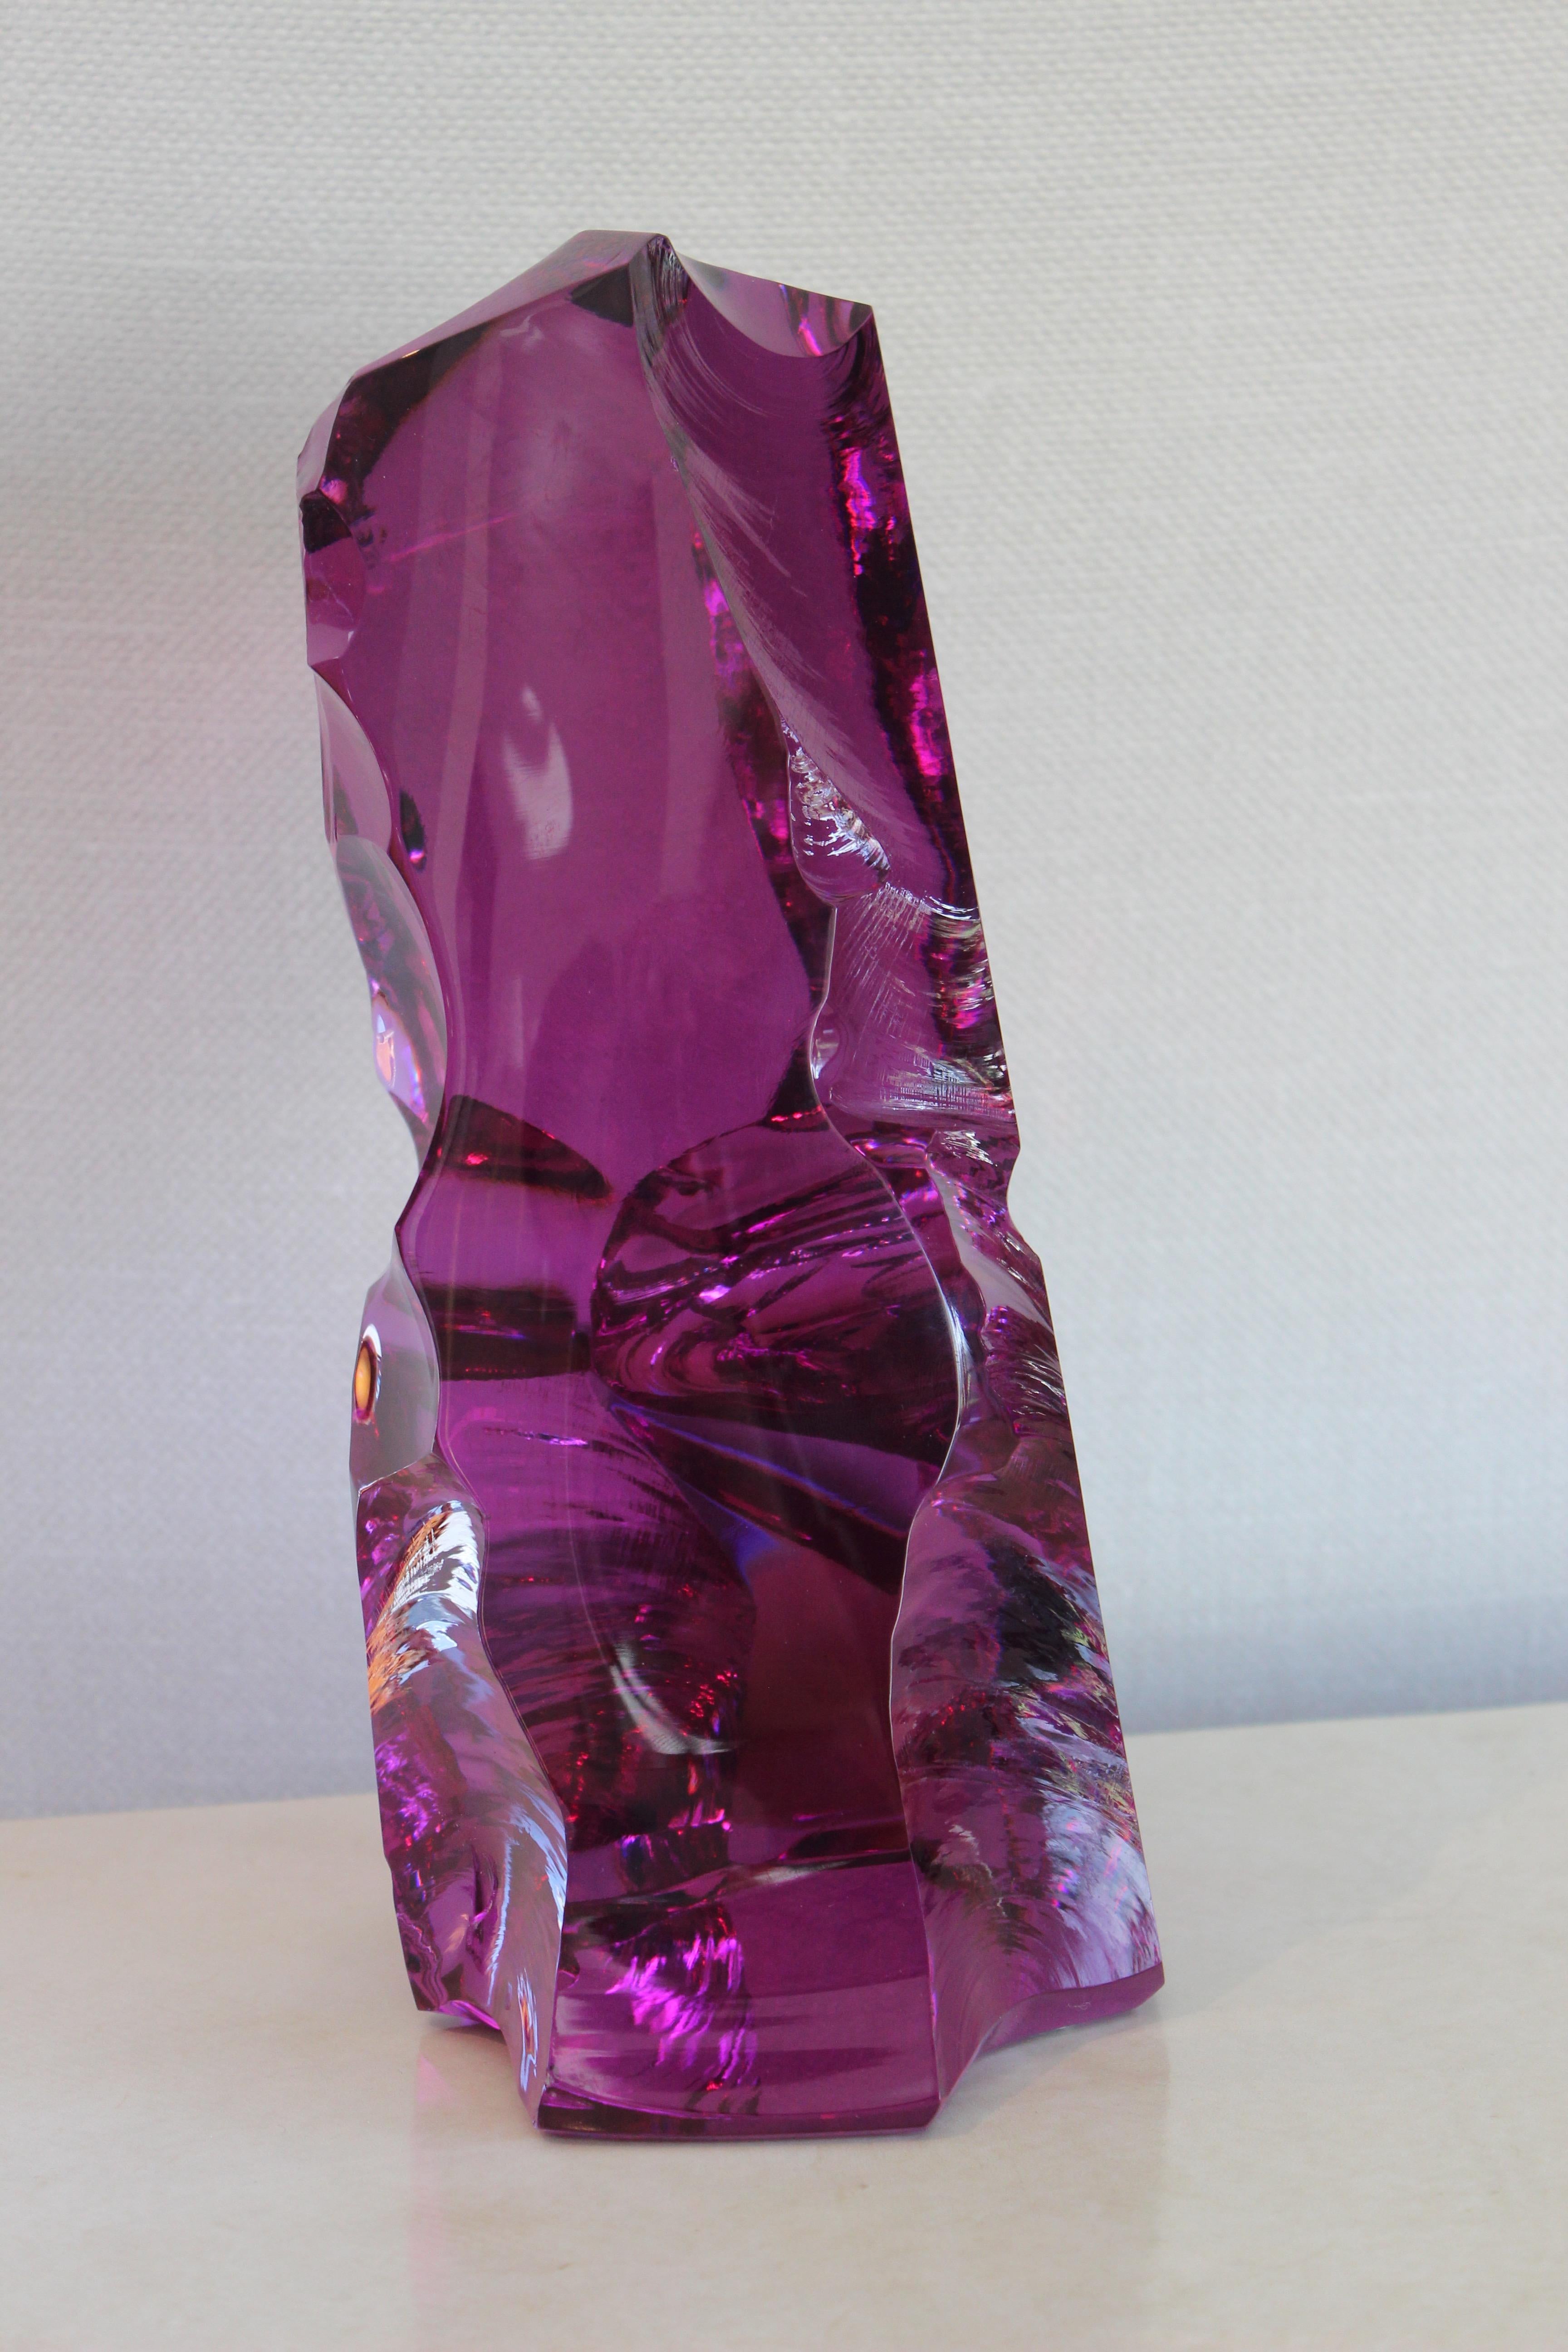 Modern purple/ violet Baccarat glass sculpture.